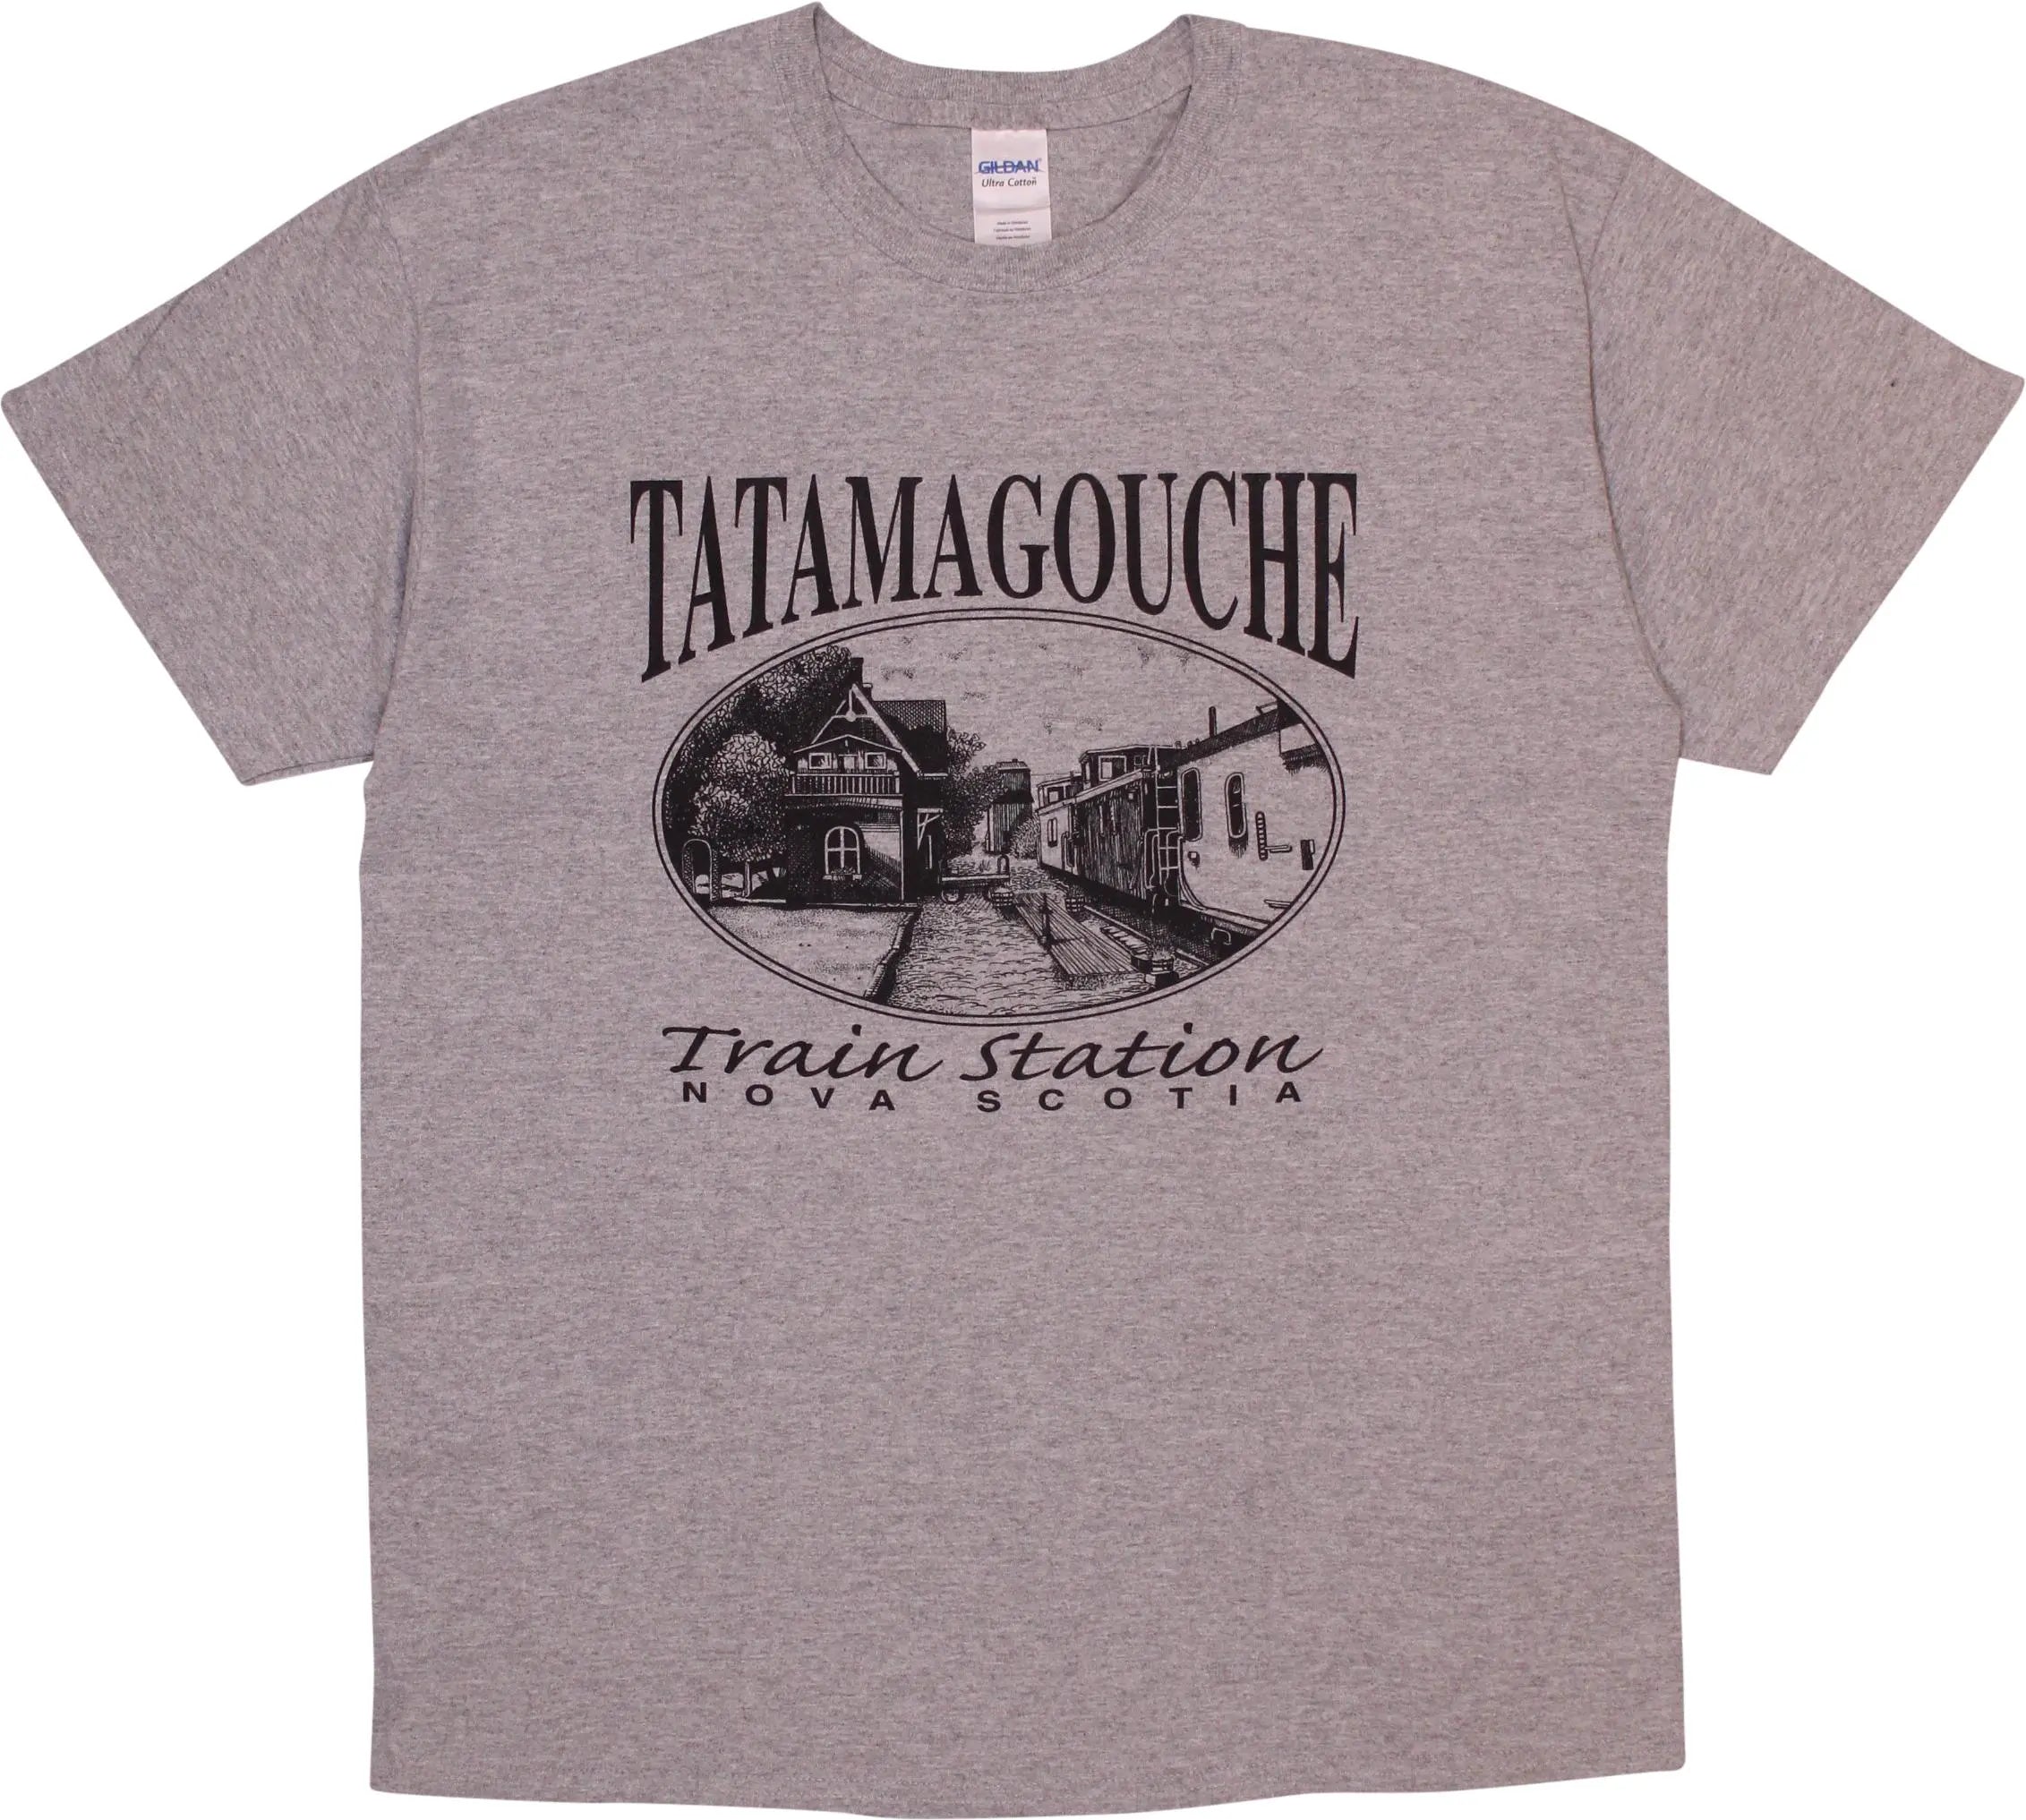 Gildan - Tatamagouche Train Station Print T-shirt- ThriftTale.com - Vintage and second handclothing